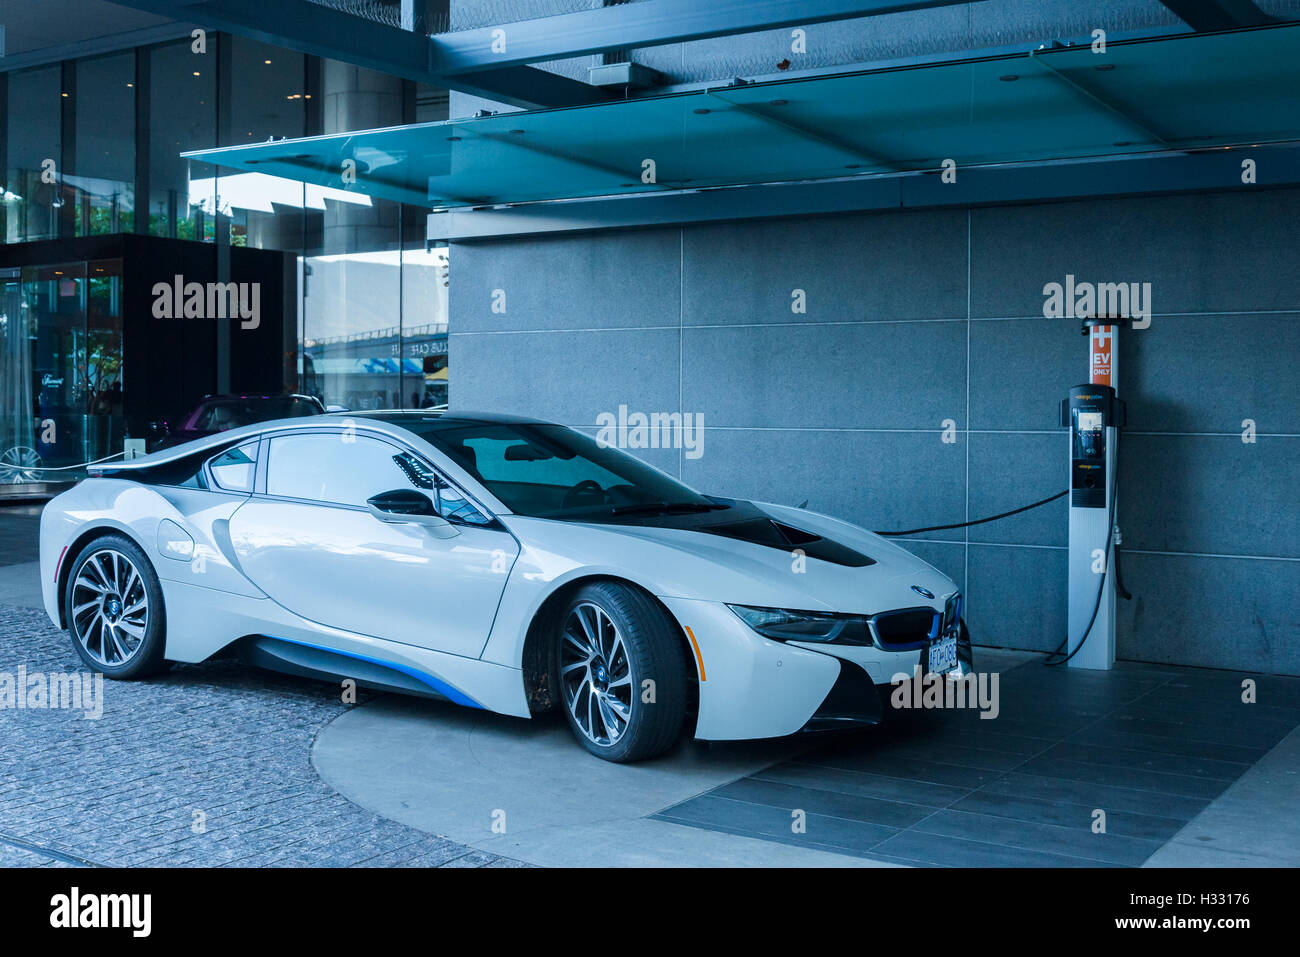 La BMW i8, aka BMW Concept Vision efficiente Dynamics, plug-in ibrido elettrico gas auto sportiva. Foto Stock